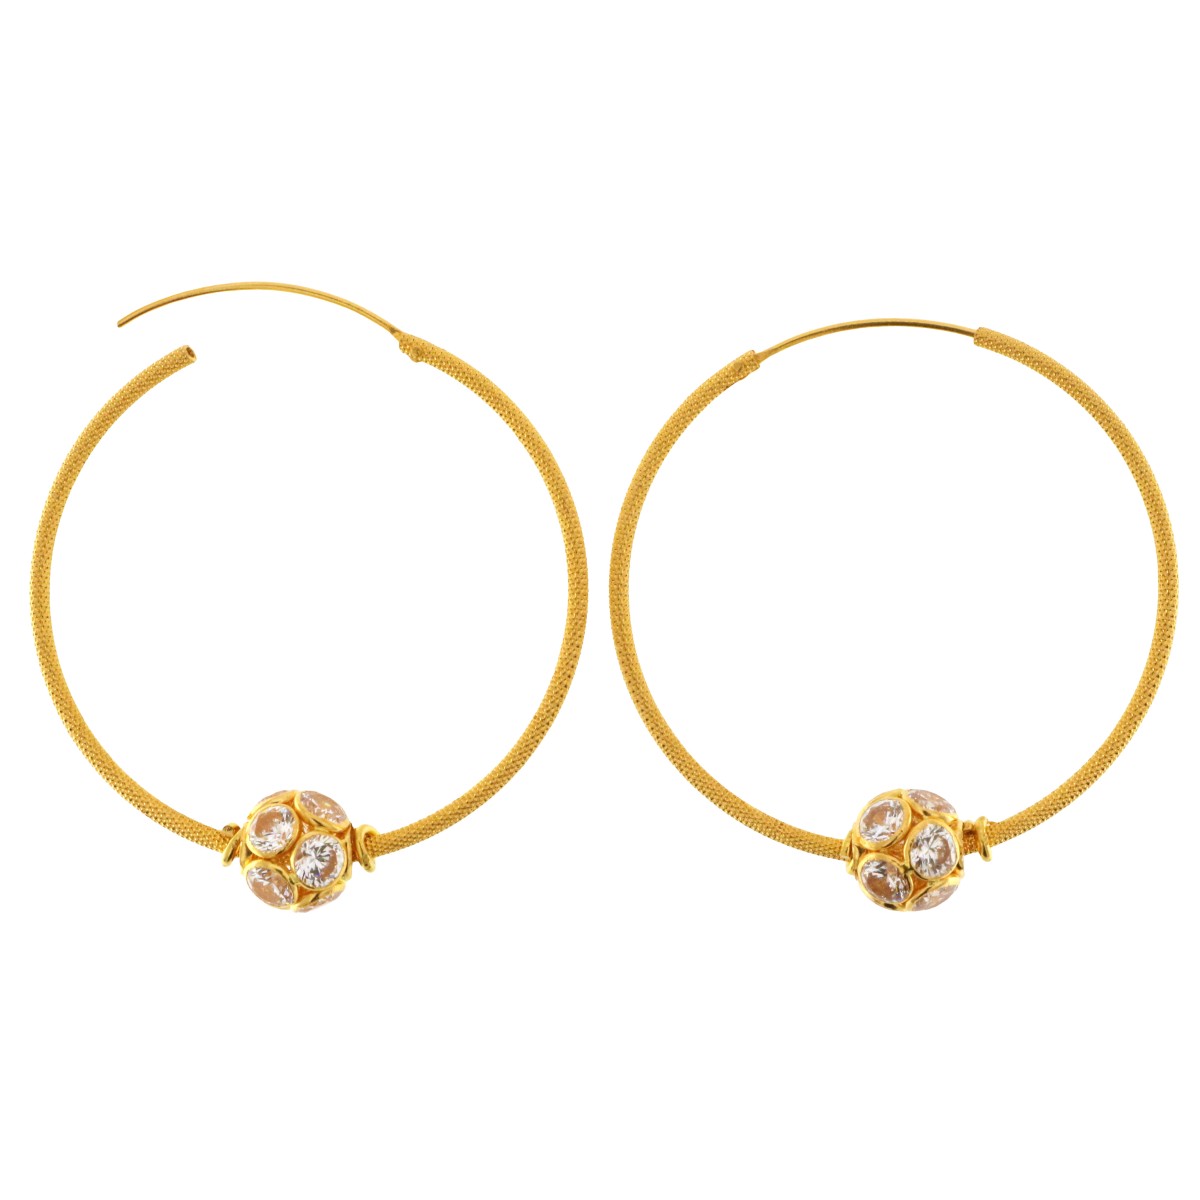 22ct Gold Extra Large Hoop Earrings